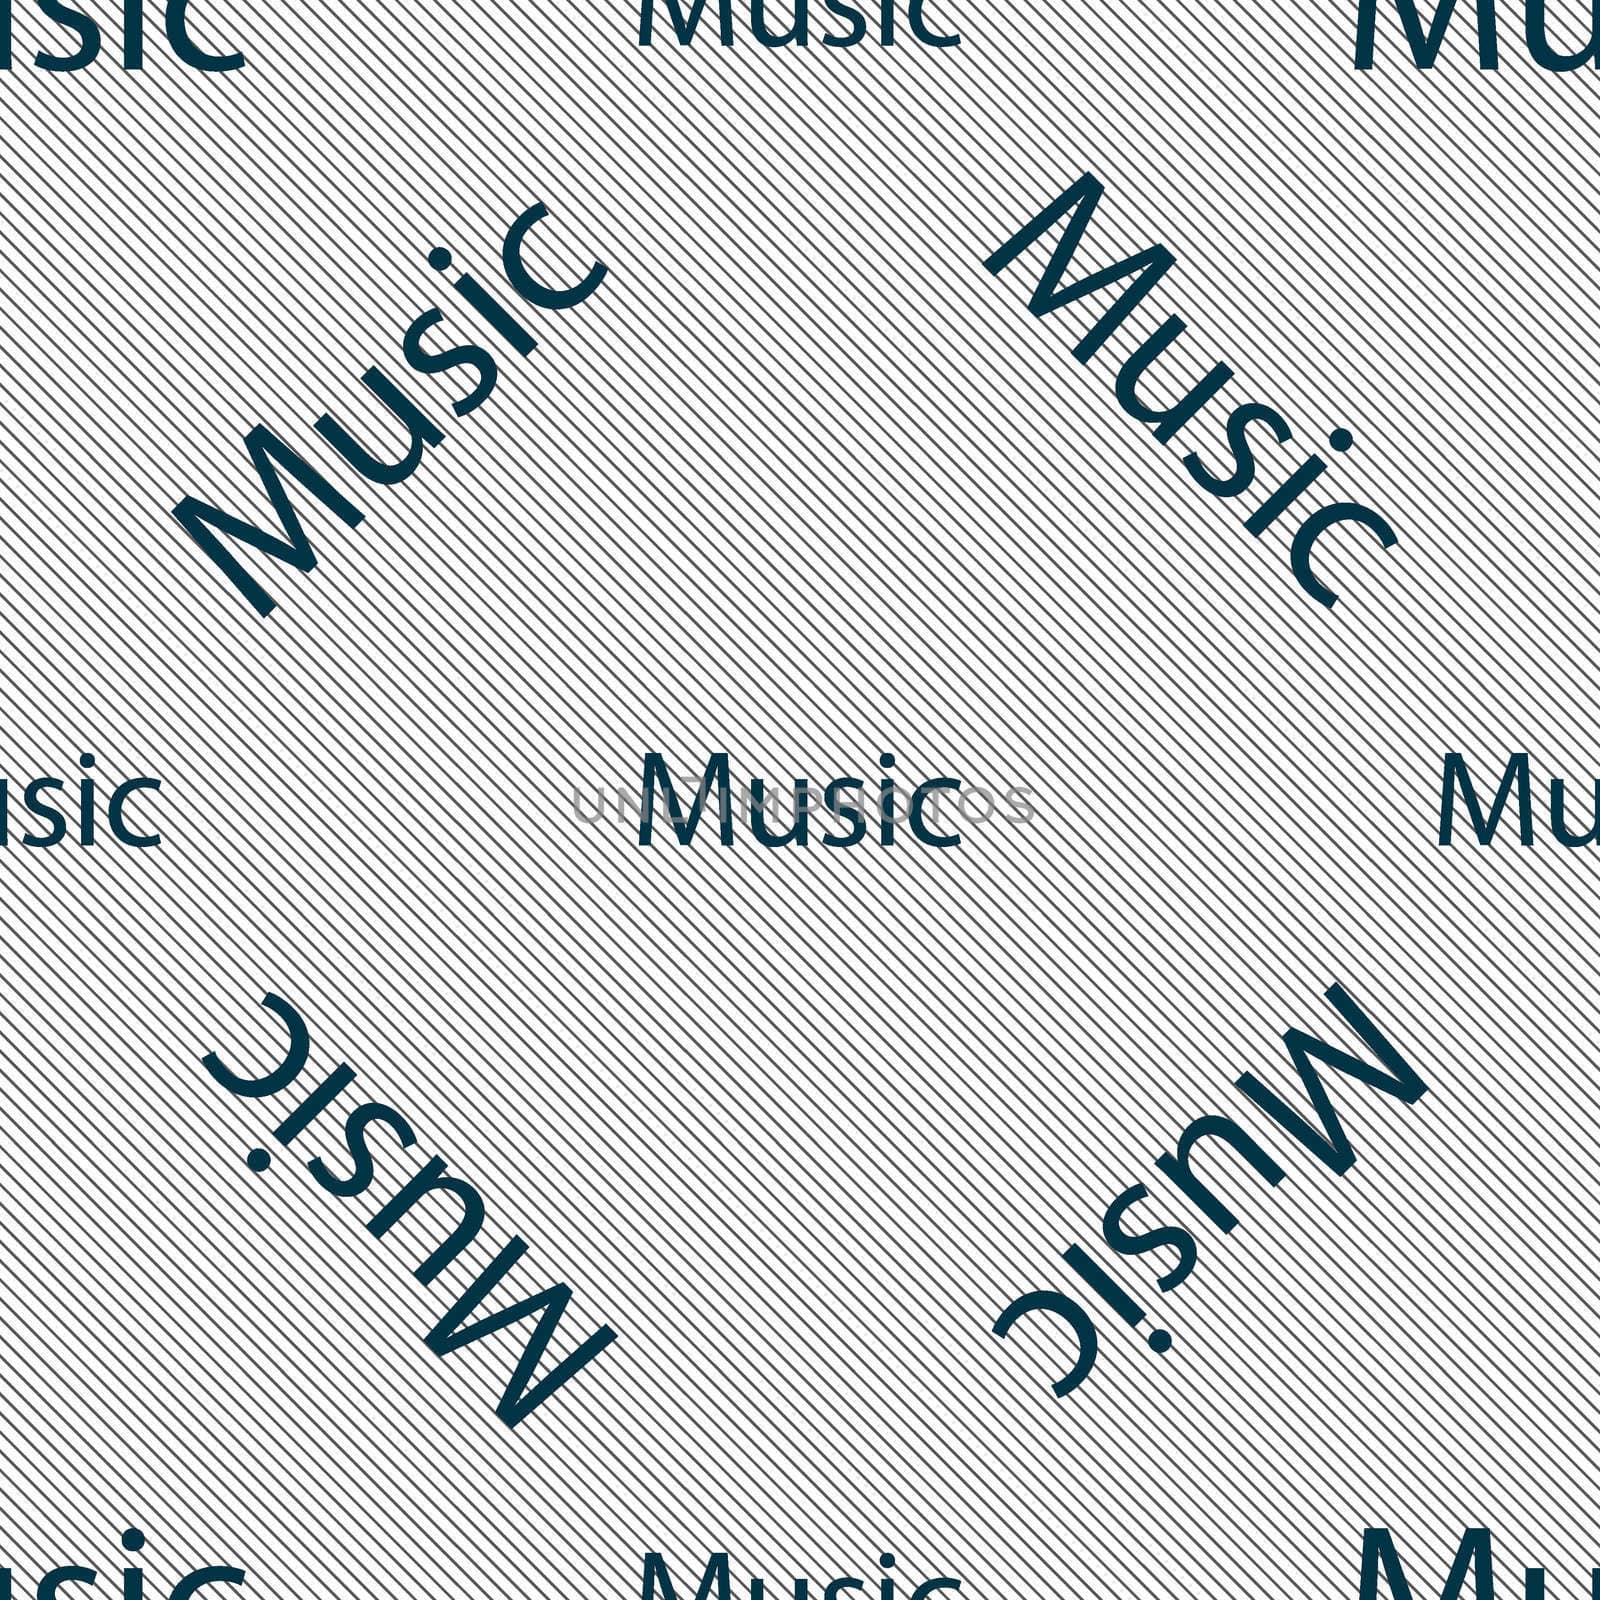 music sign icon. Karaoke symbol. Seamless pattern with geometric texture. illustration